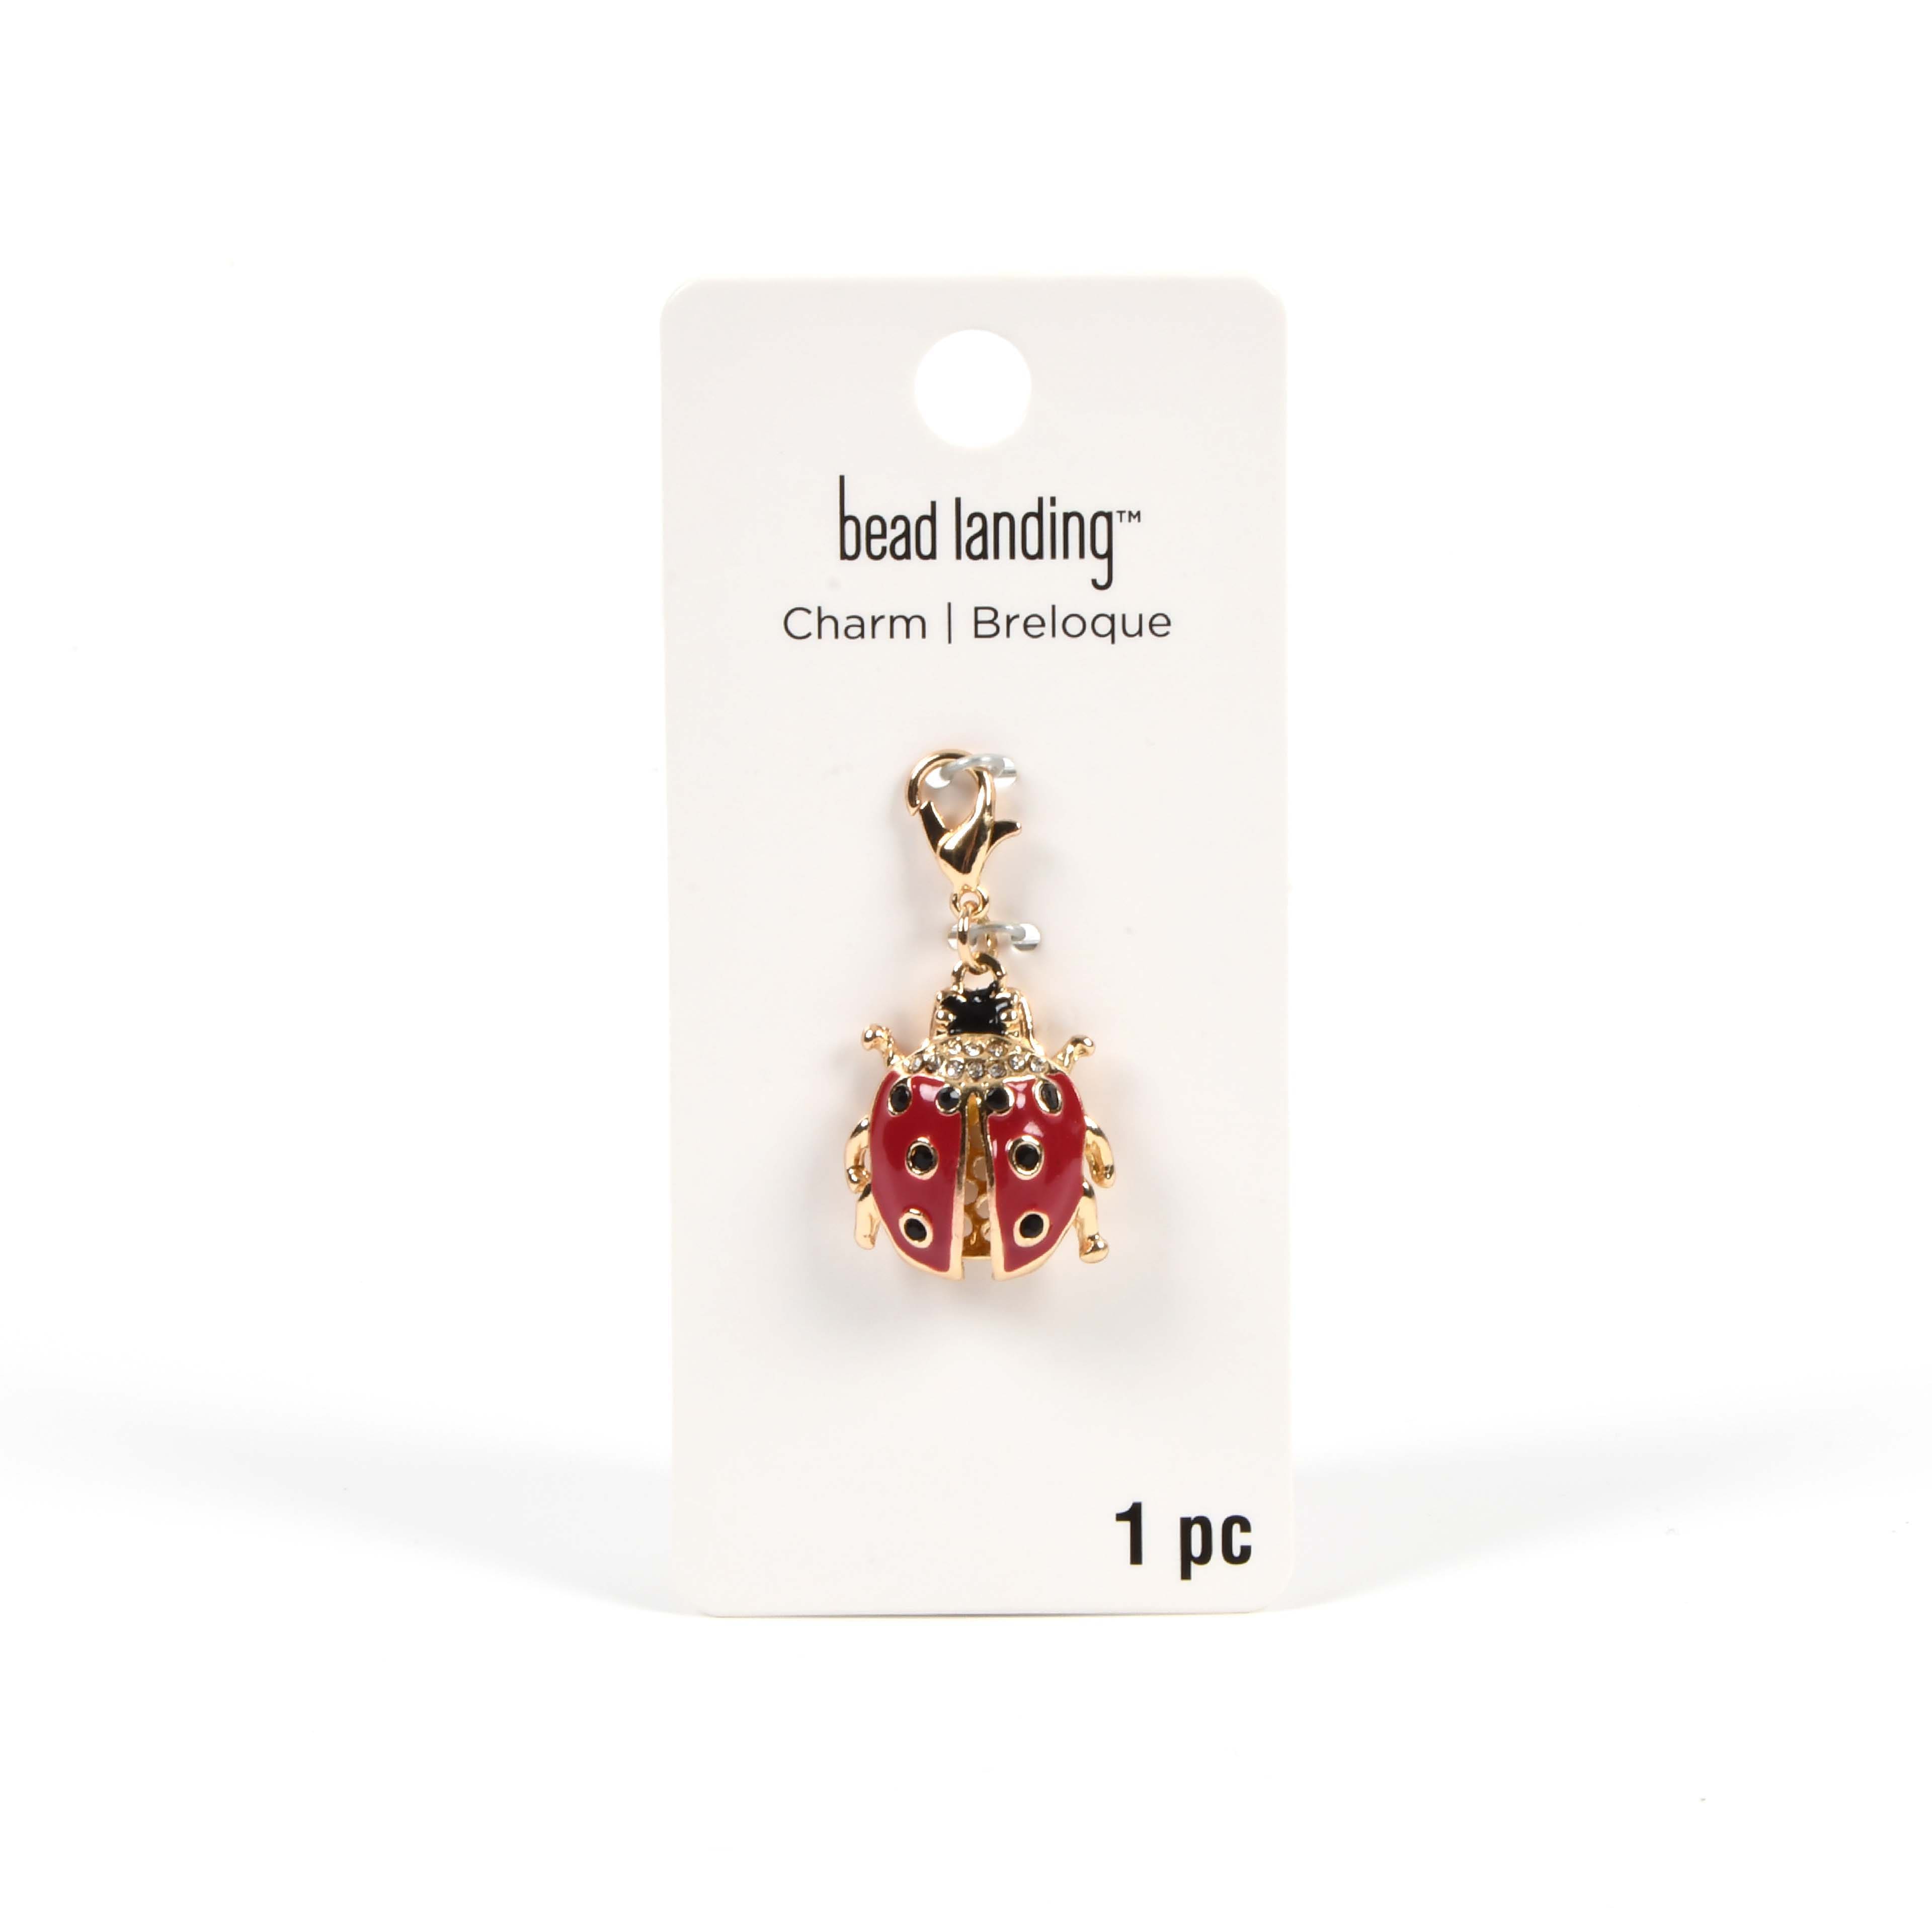 Ladybug Charm by Bead Landing&#x2122;